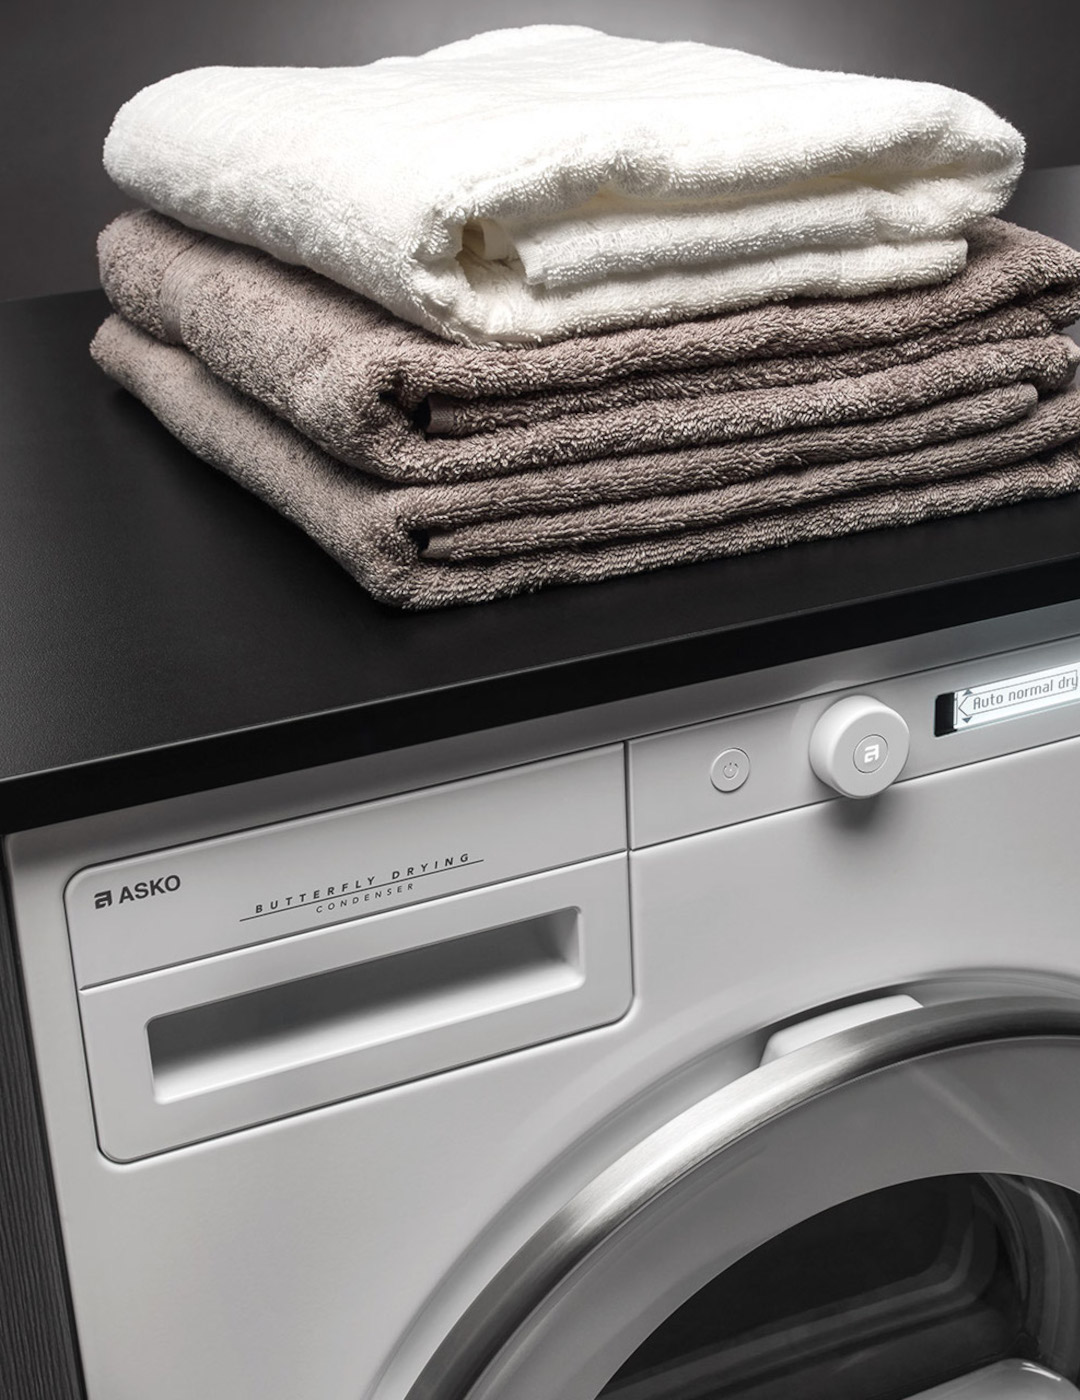 ASKO-Laundry-Tumble-Dryers-Classic-mobile.jpg